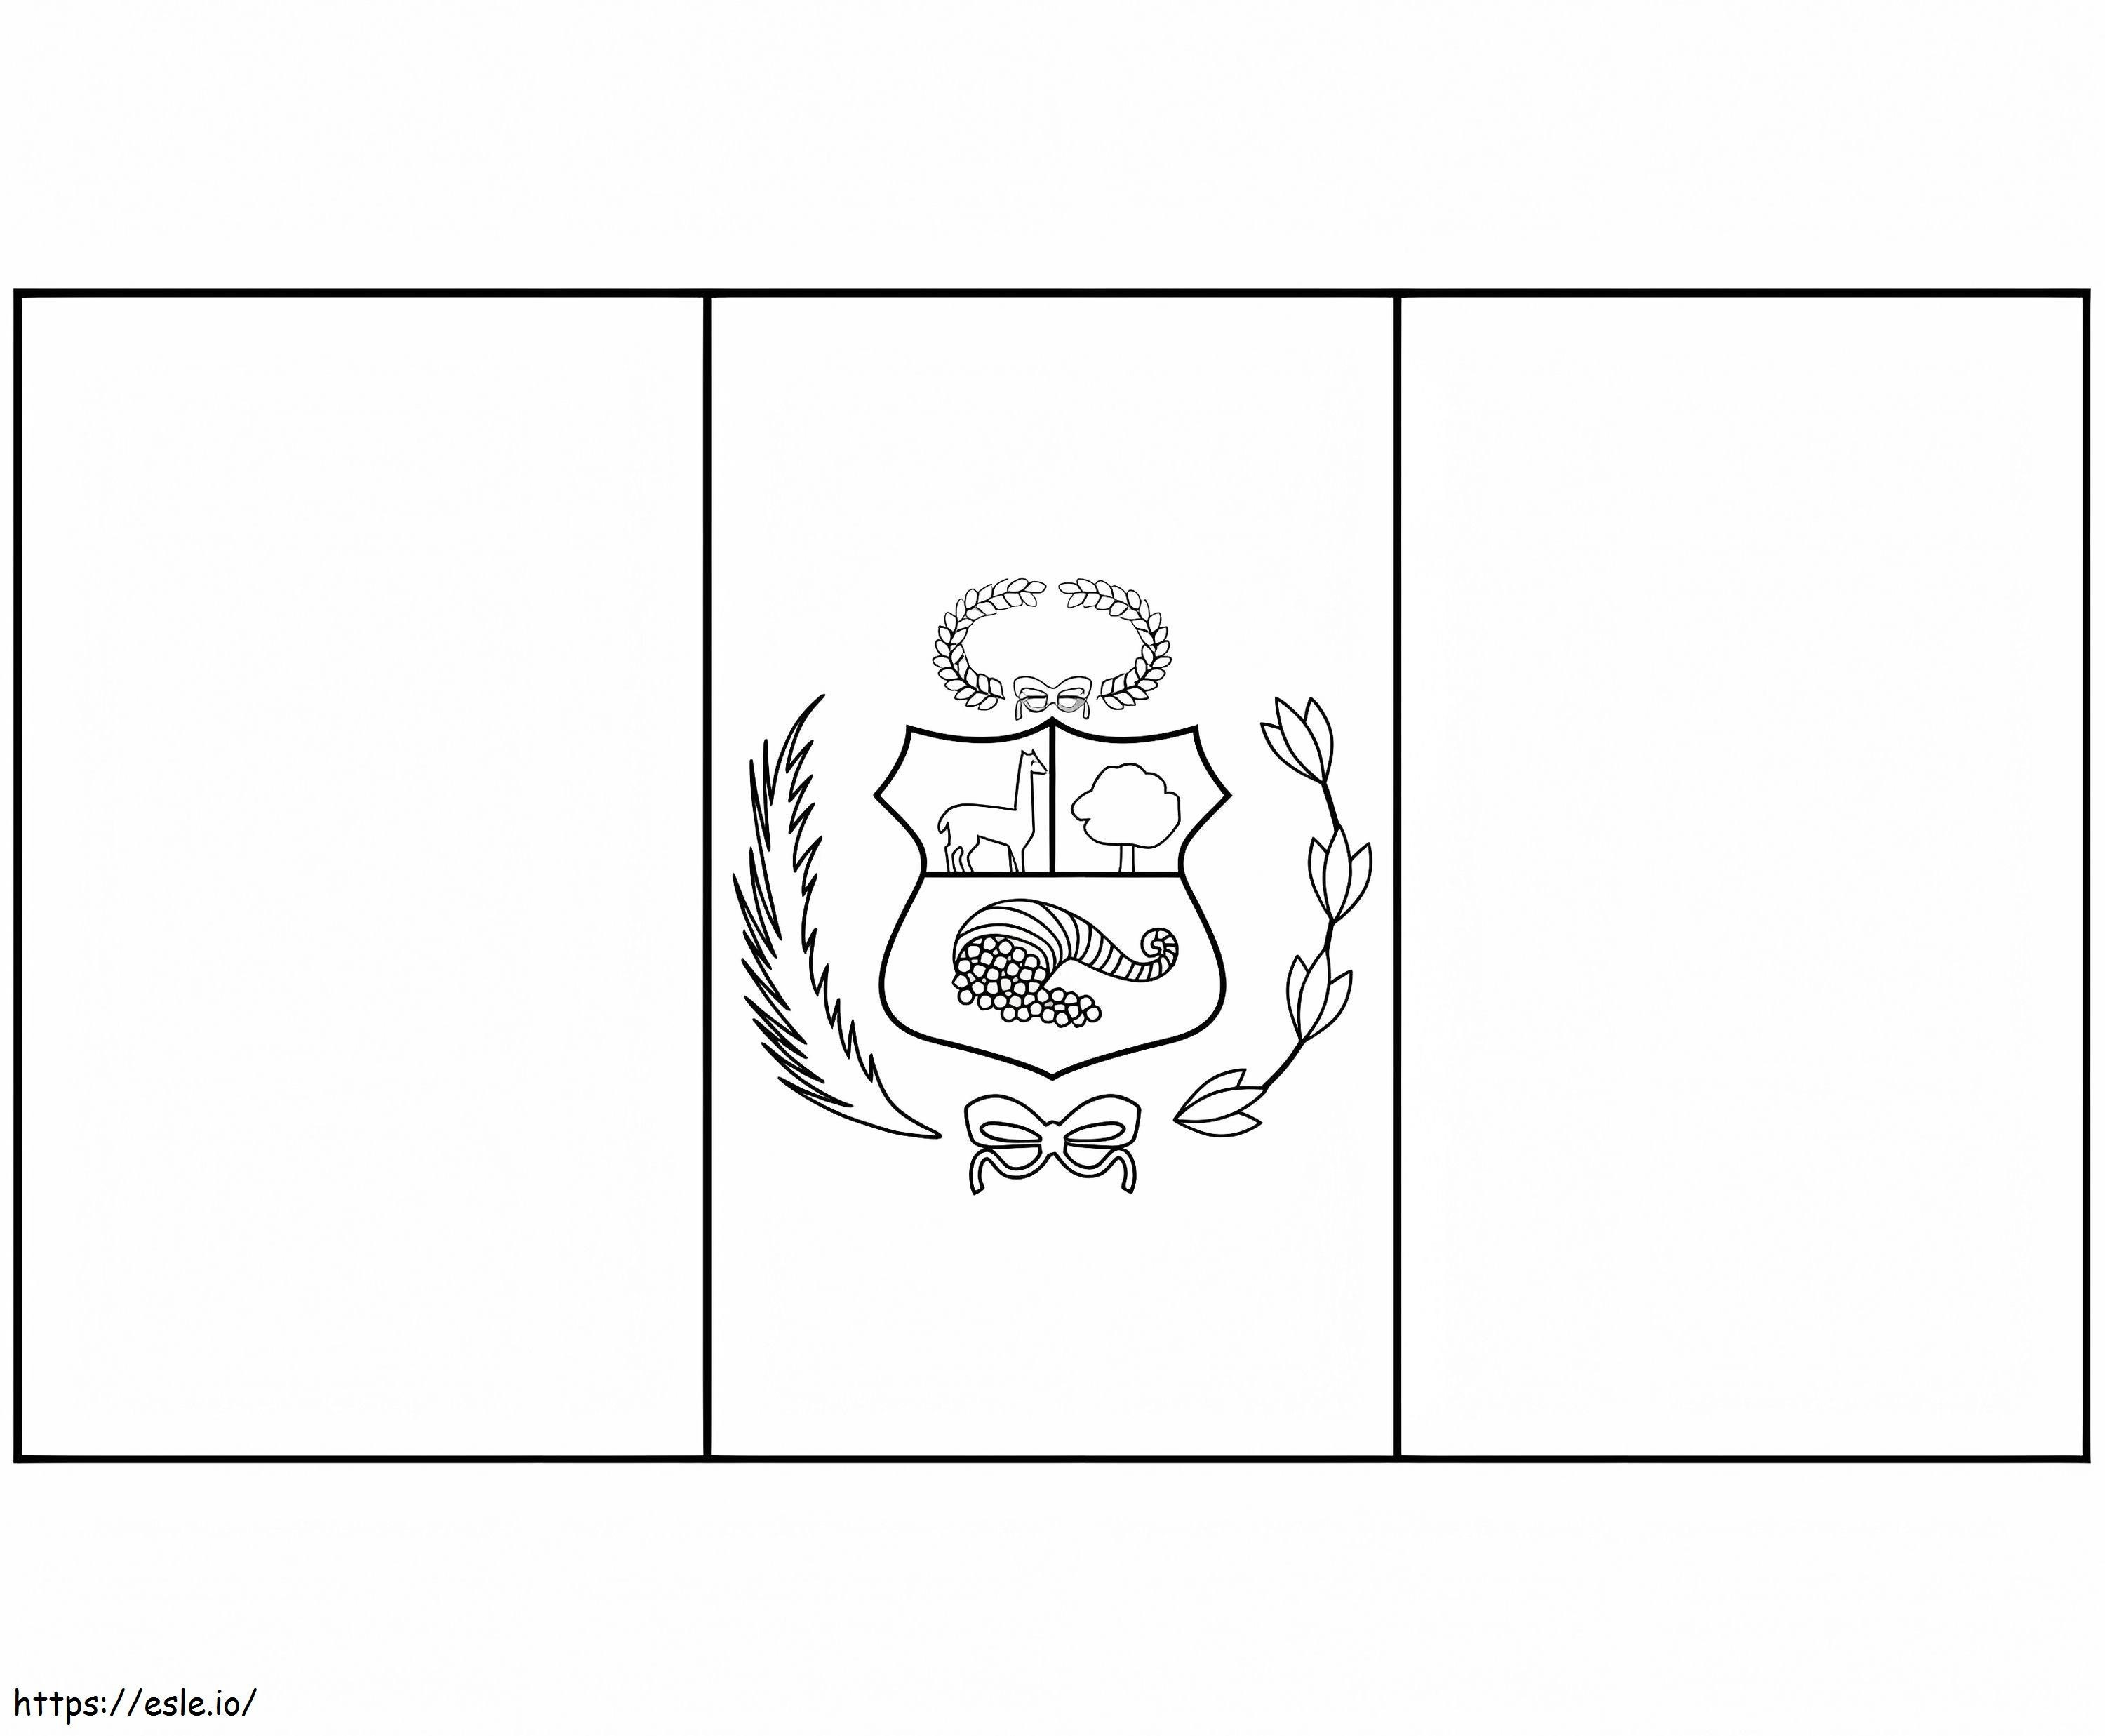 Bendera Peru Gambar Mewarnai